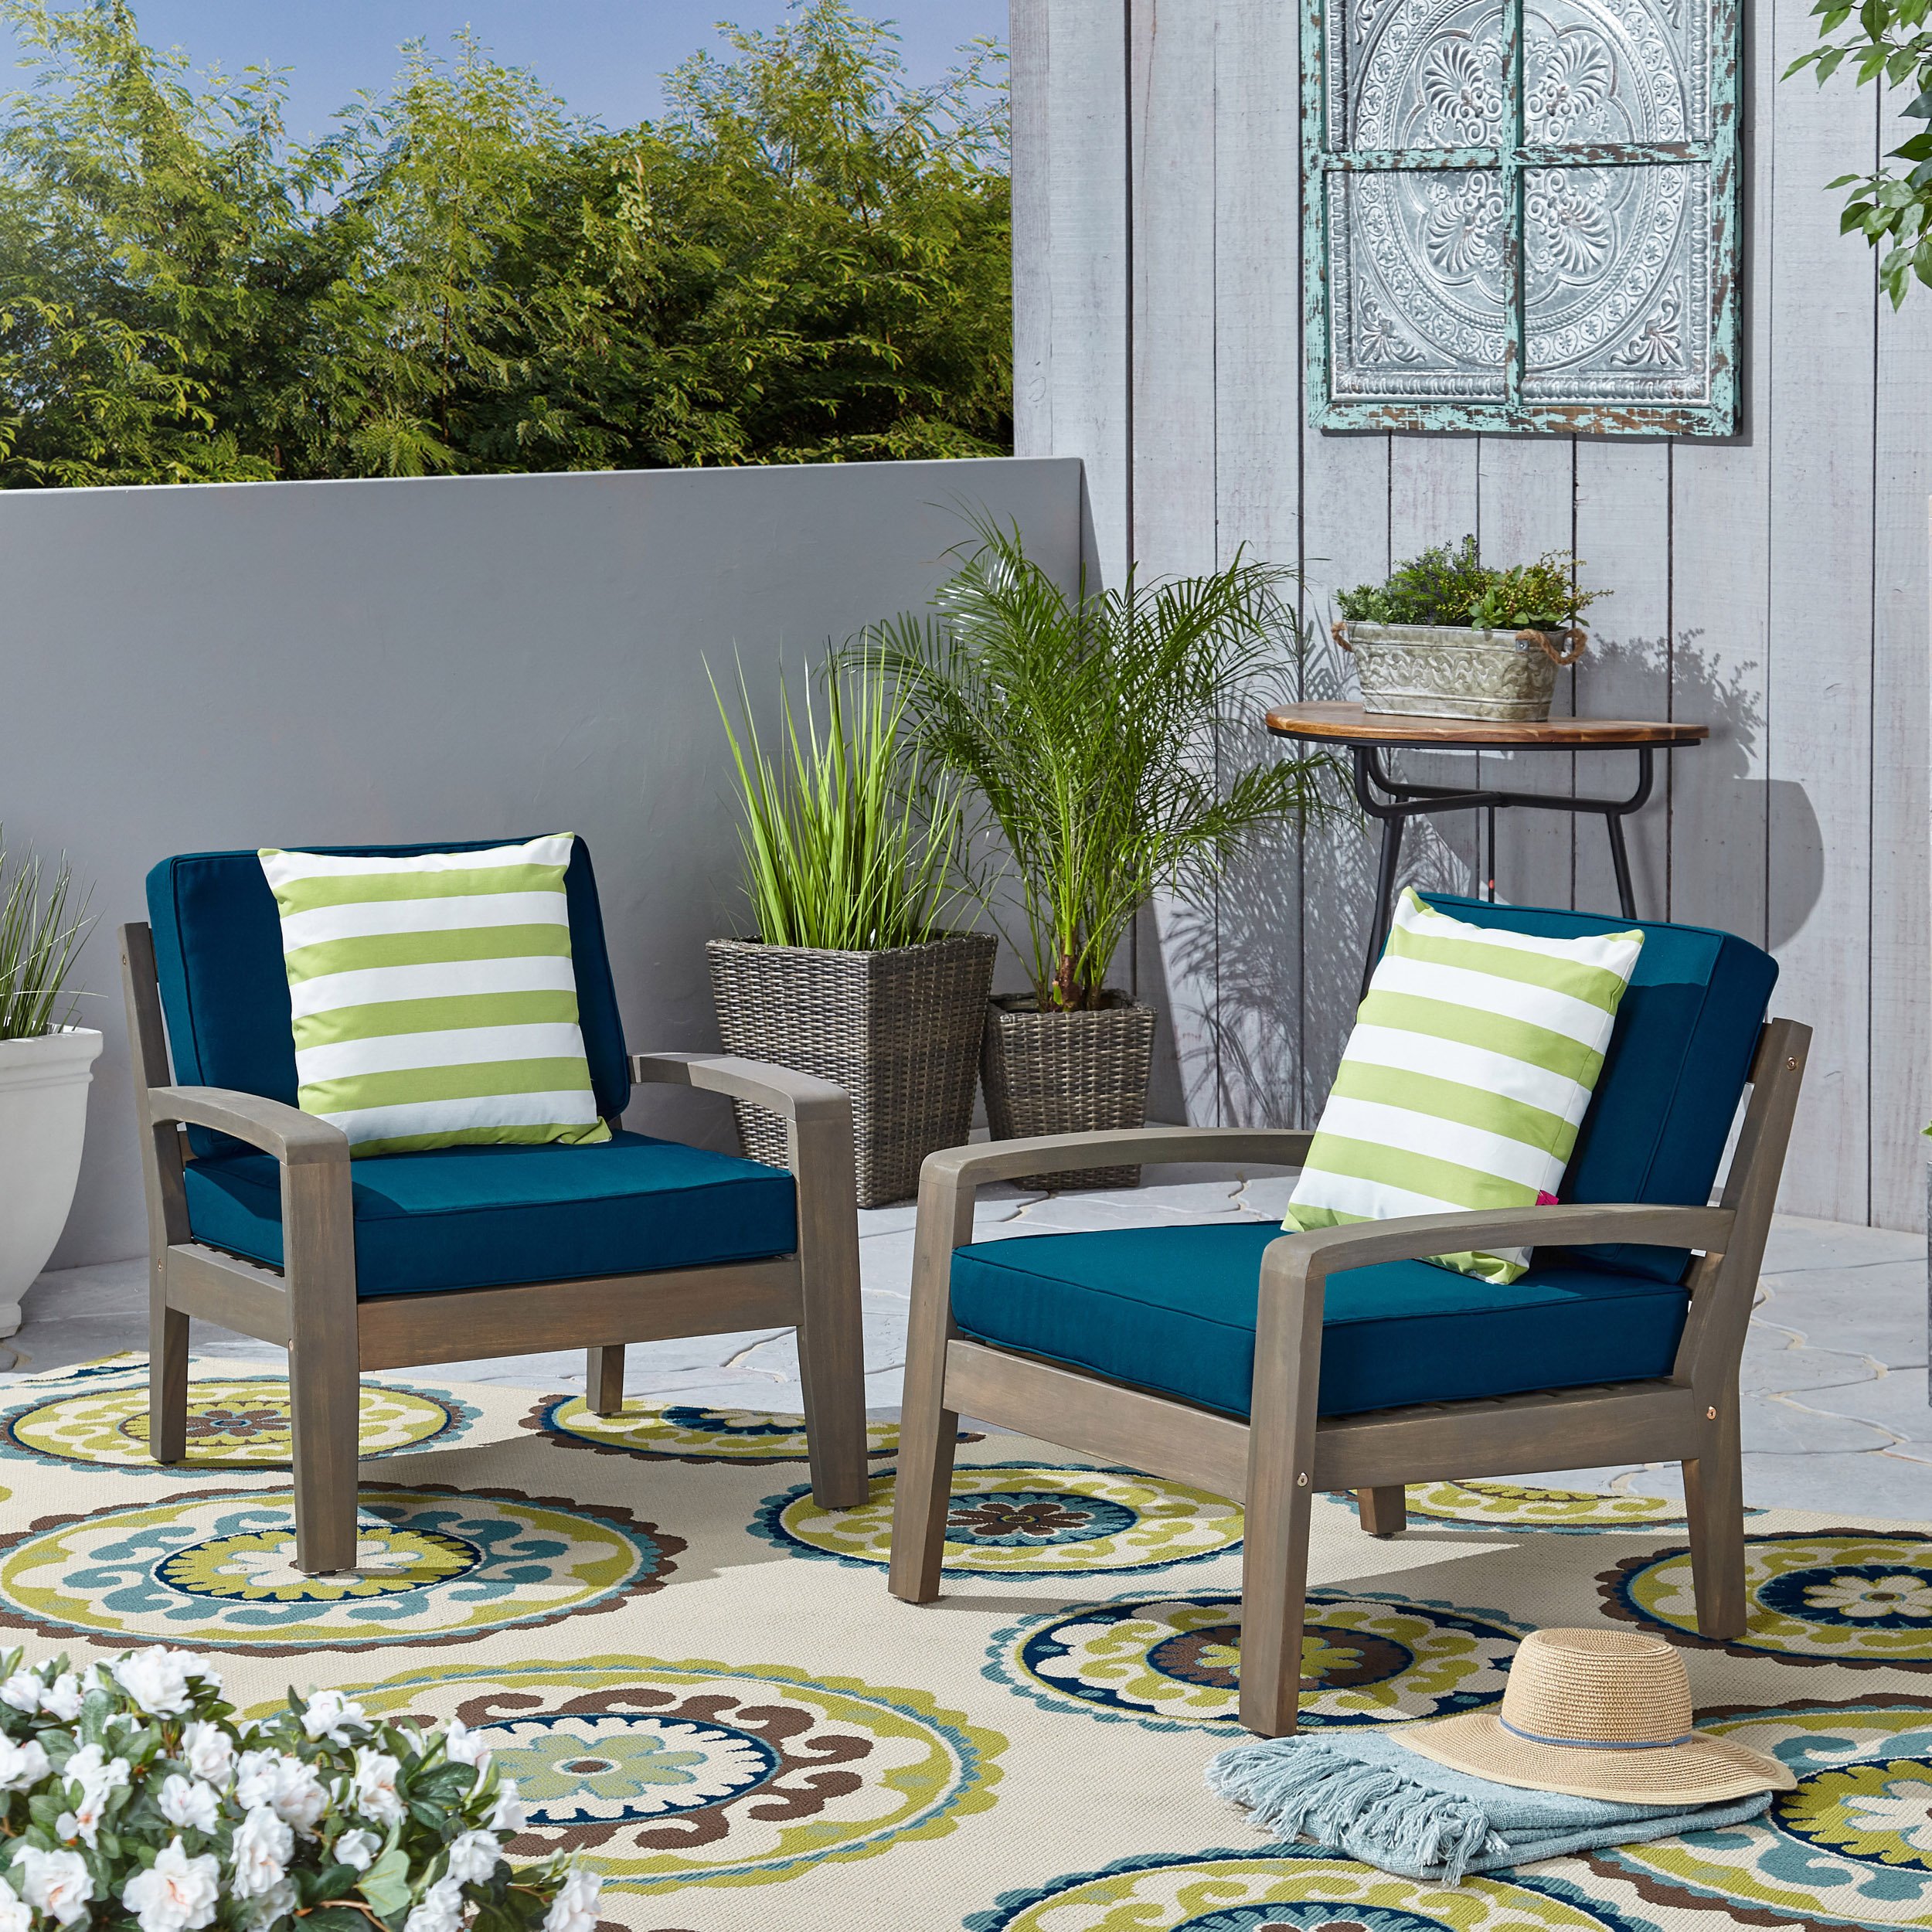 Giselle Outdoor Acacia Wood Club Chairs With Sunbrella Cushions - Gray + Sunbrella Navy Blue, Set Of 4